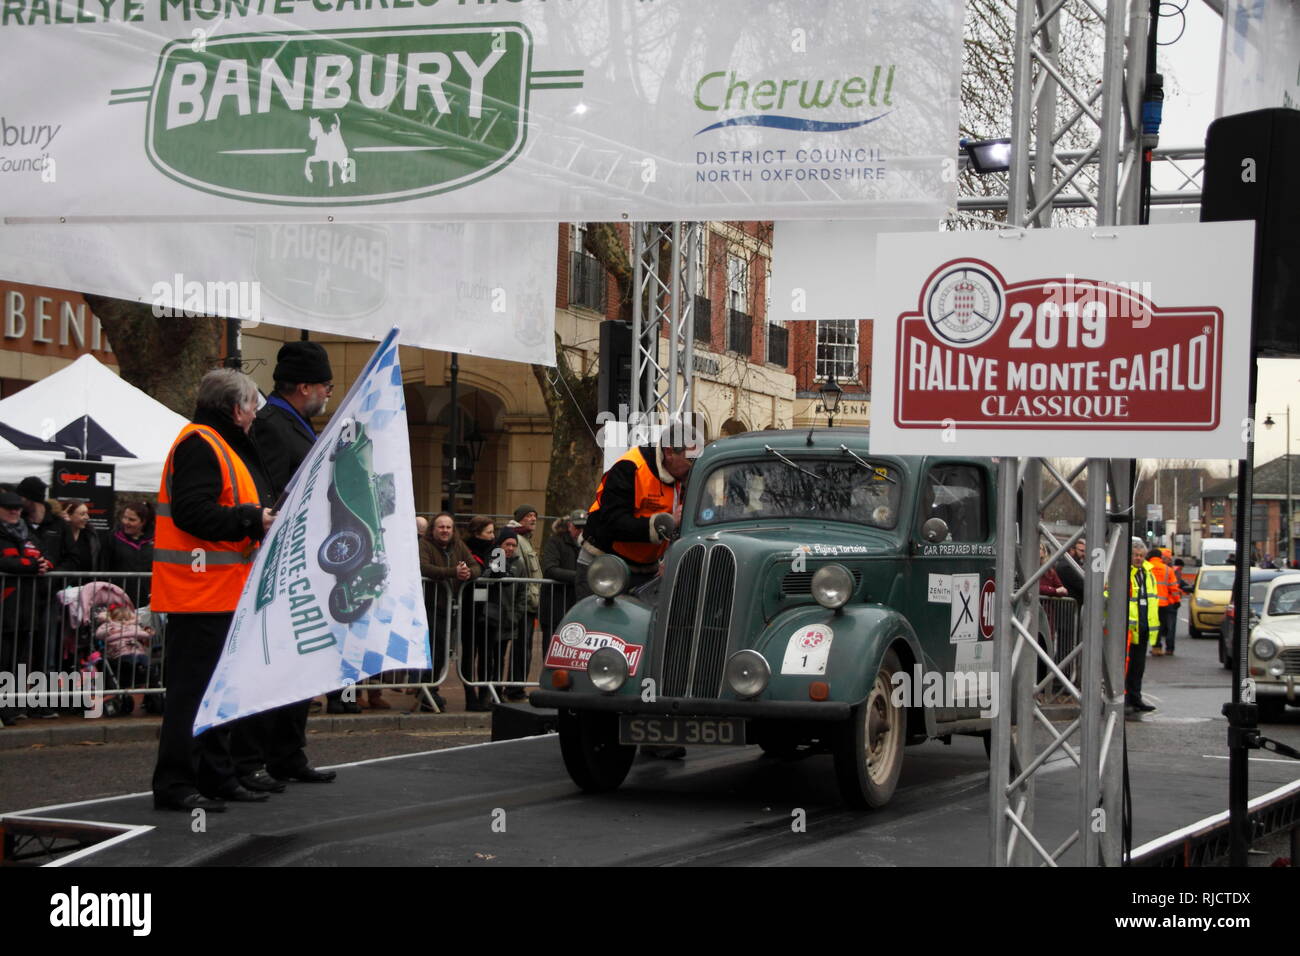 Monte-Carlo Rally Banbury 2019 Stock Photo